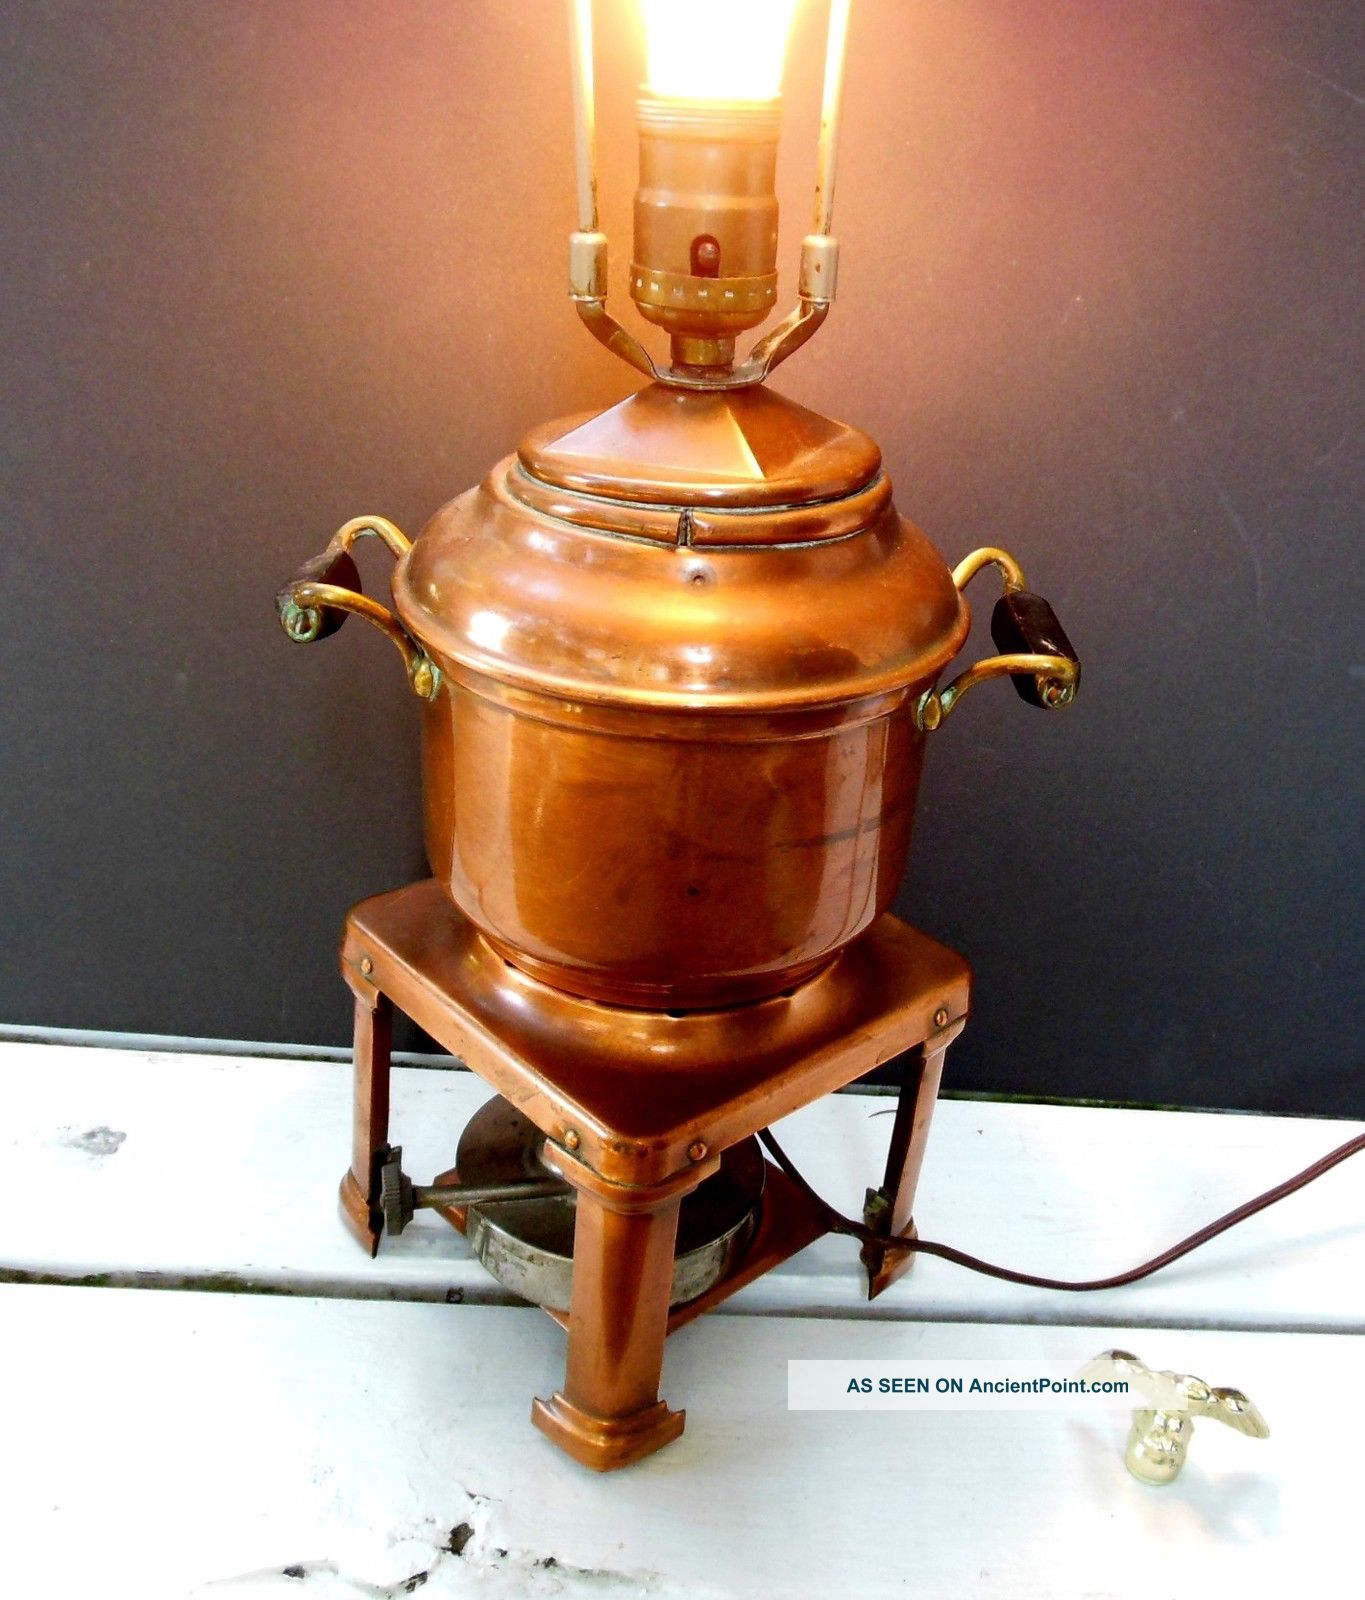 http://ancientpoint.com/imgs/a/e/n/v/u/cute_antique_copper_sternau_coffee_maker_pot_mini_samovar_converted_to_lamp_1_lgw.jpg